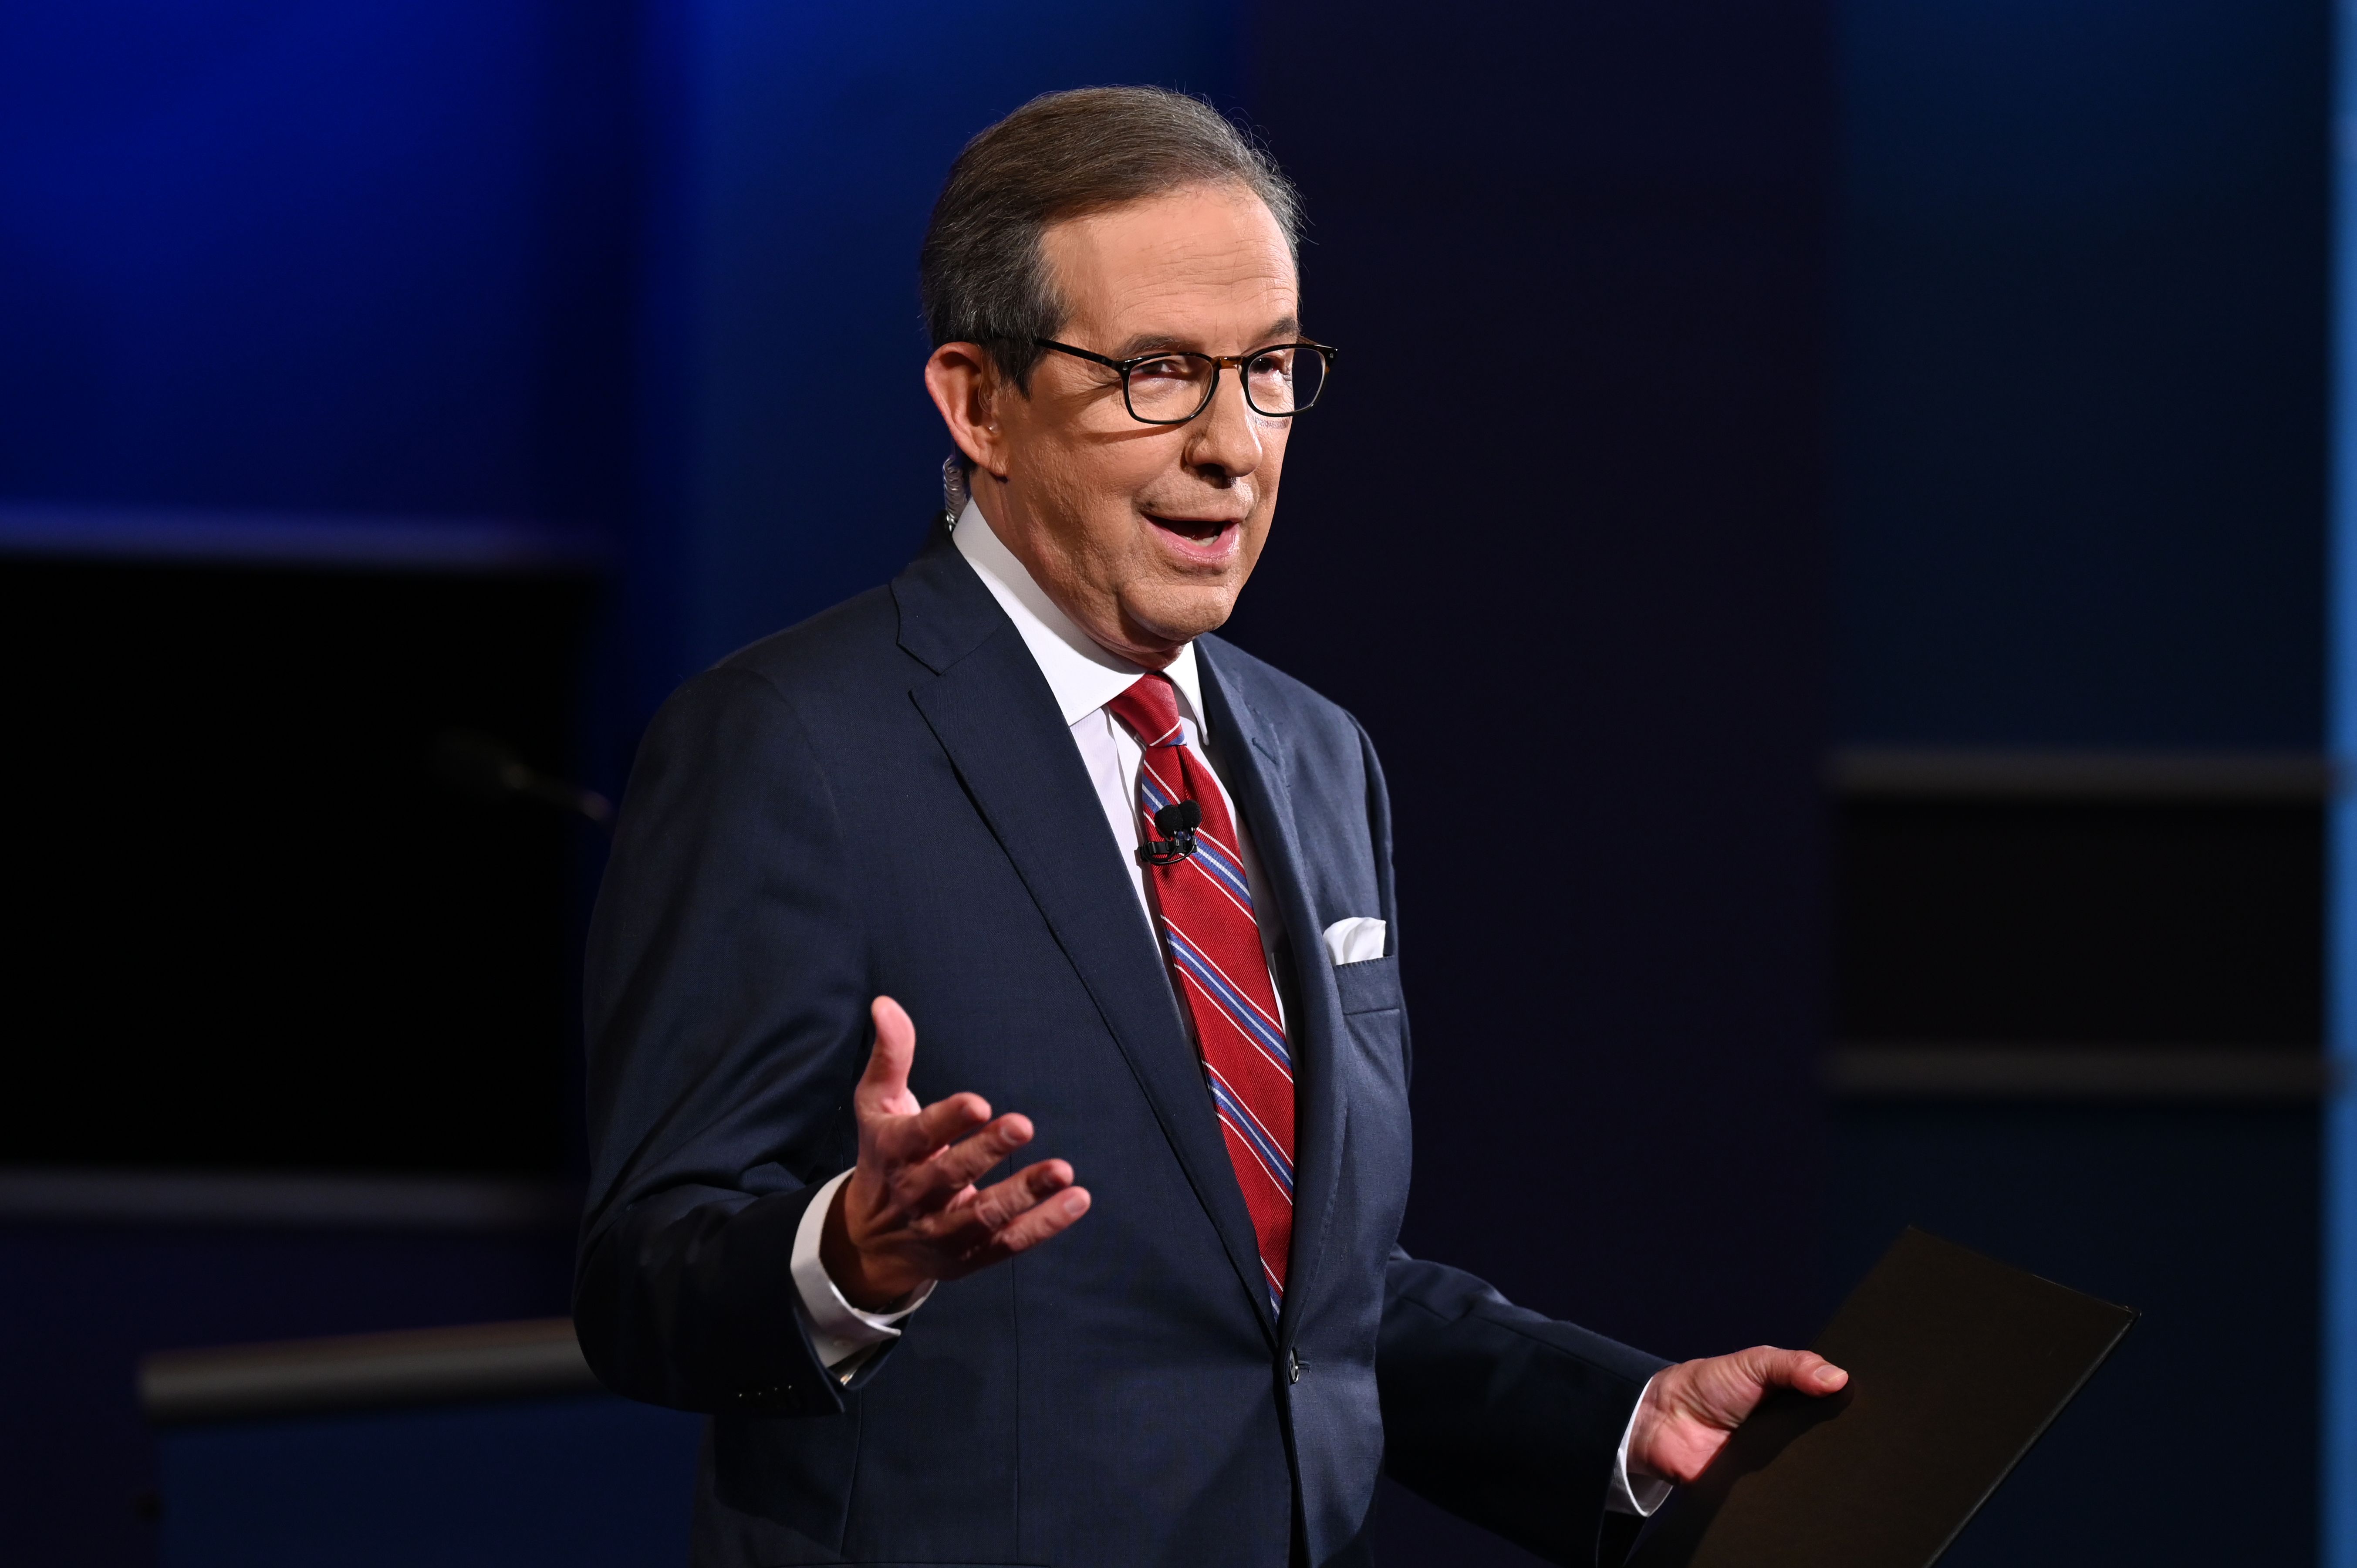 Chris Wallace moderates a 2020 presidential debate 